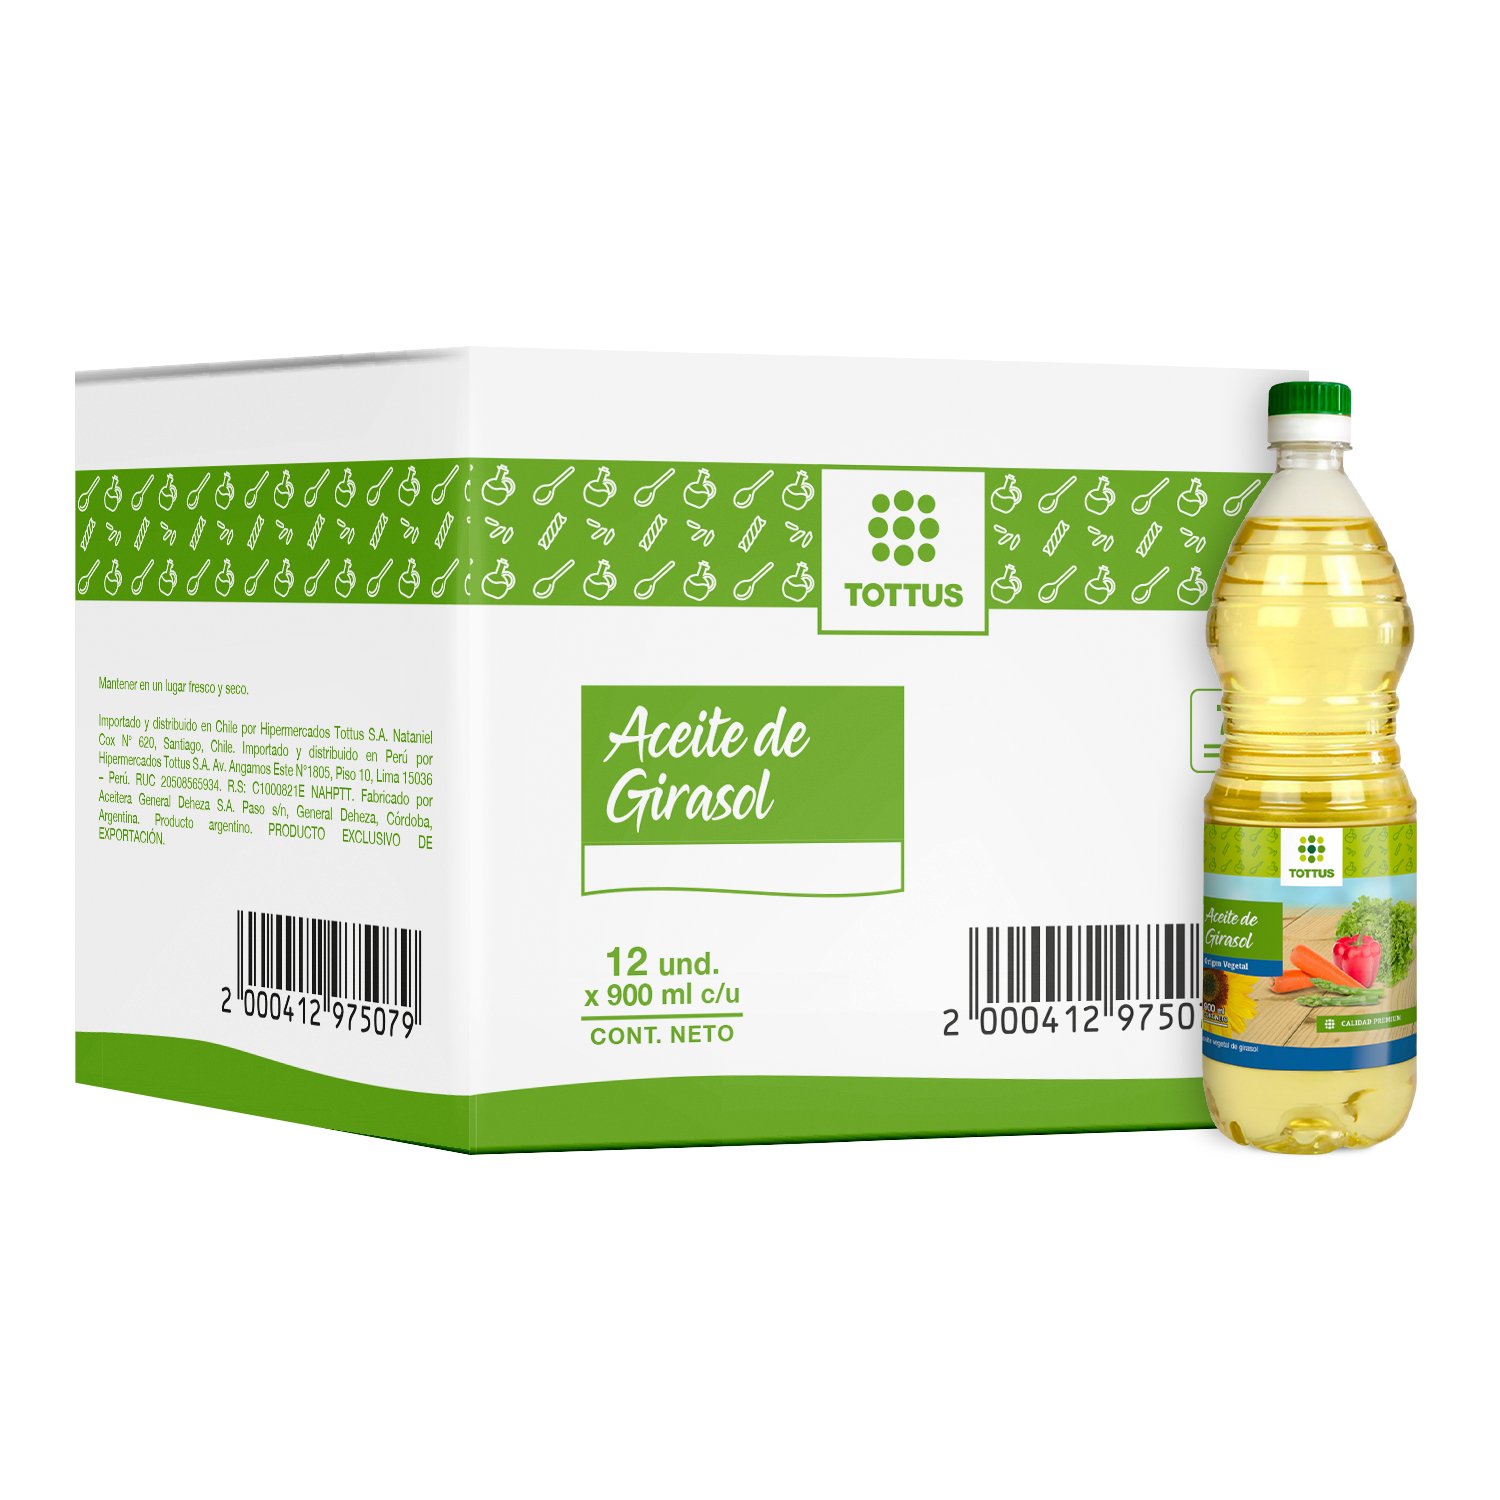 Aceite Vegetal CIL Botella 900ml